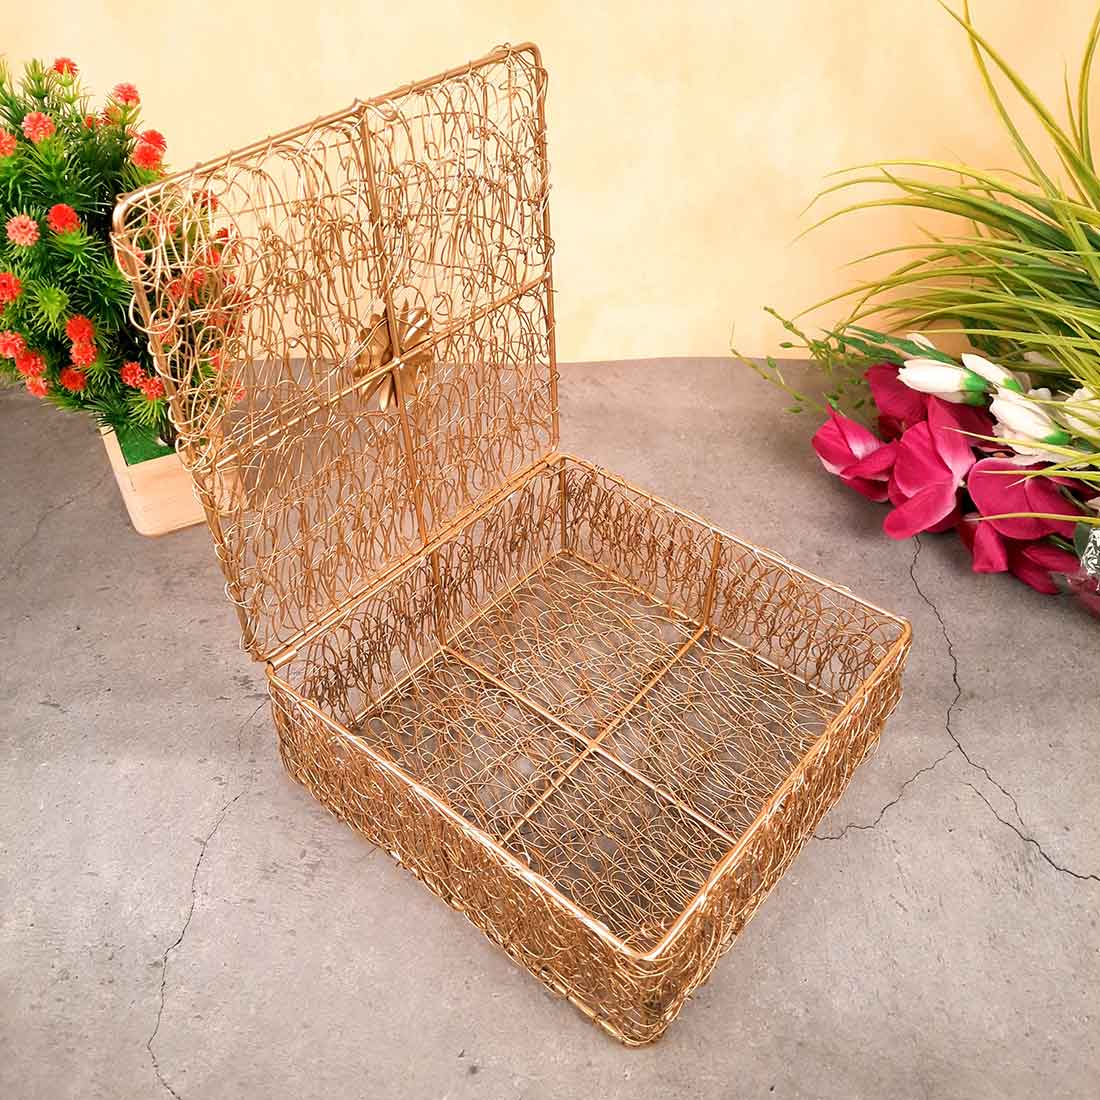 Mesh Wire Box With Lid | Multipurpose Golden Box - For Home Decor, Wedding Gift, Shagun Basket - 9 Inch Apkamart